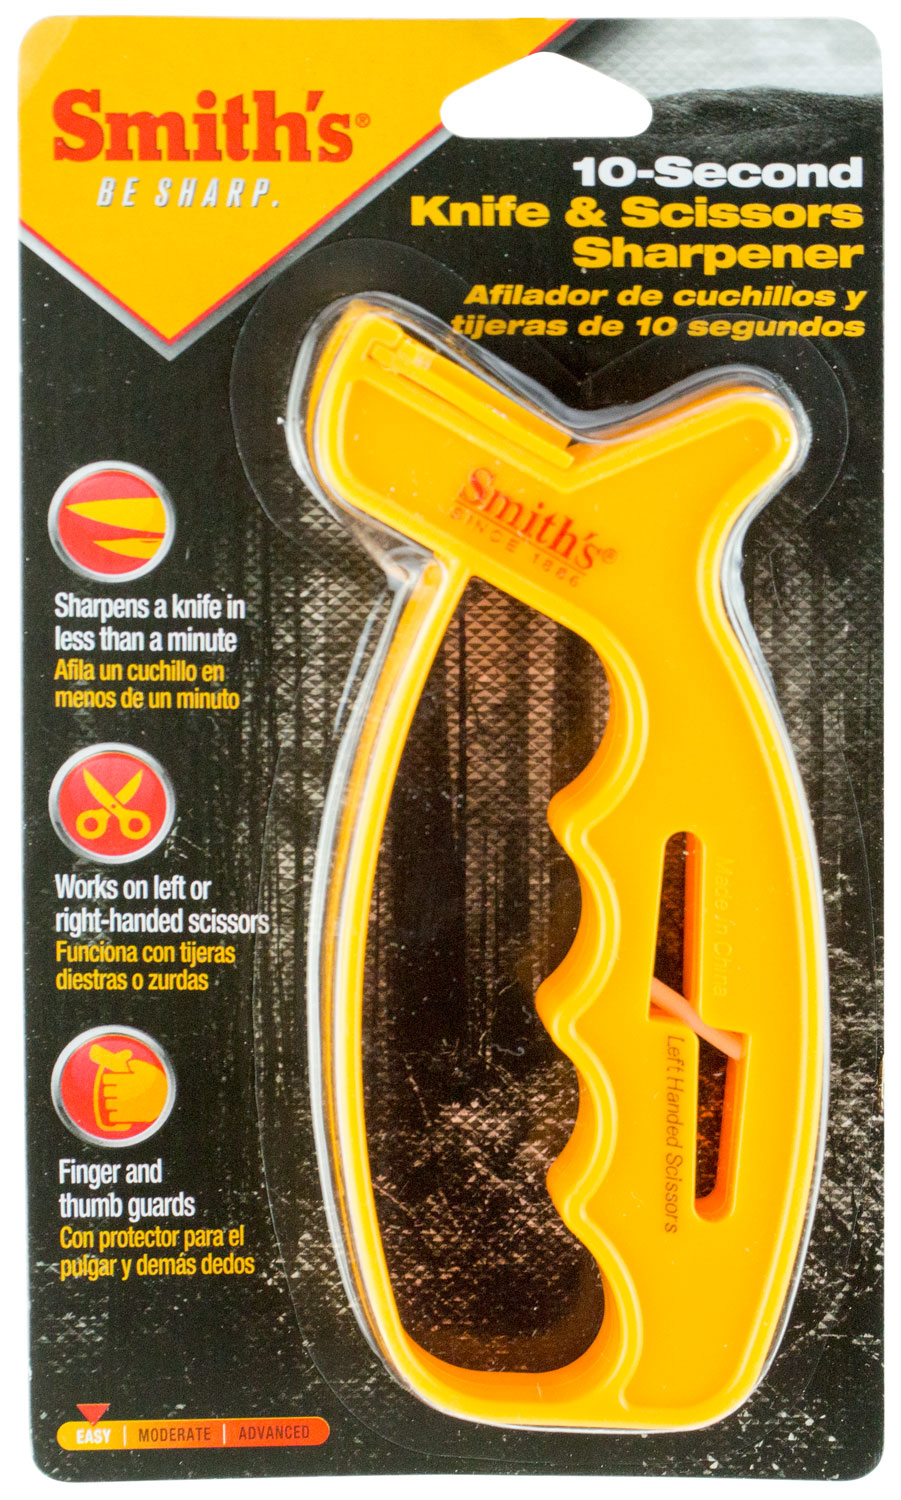 Smiths Products JIFF-S 10-Second Knife & Scissor Sharpener Hand Held Fine, Coarse Carbide, Ceramic Sharpener Plastic Handle Yellow